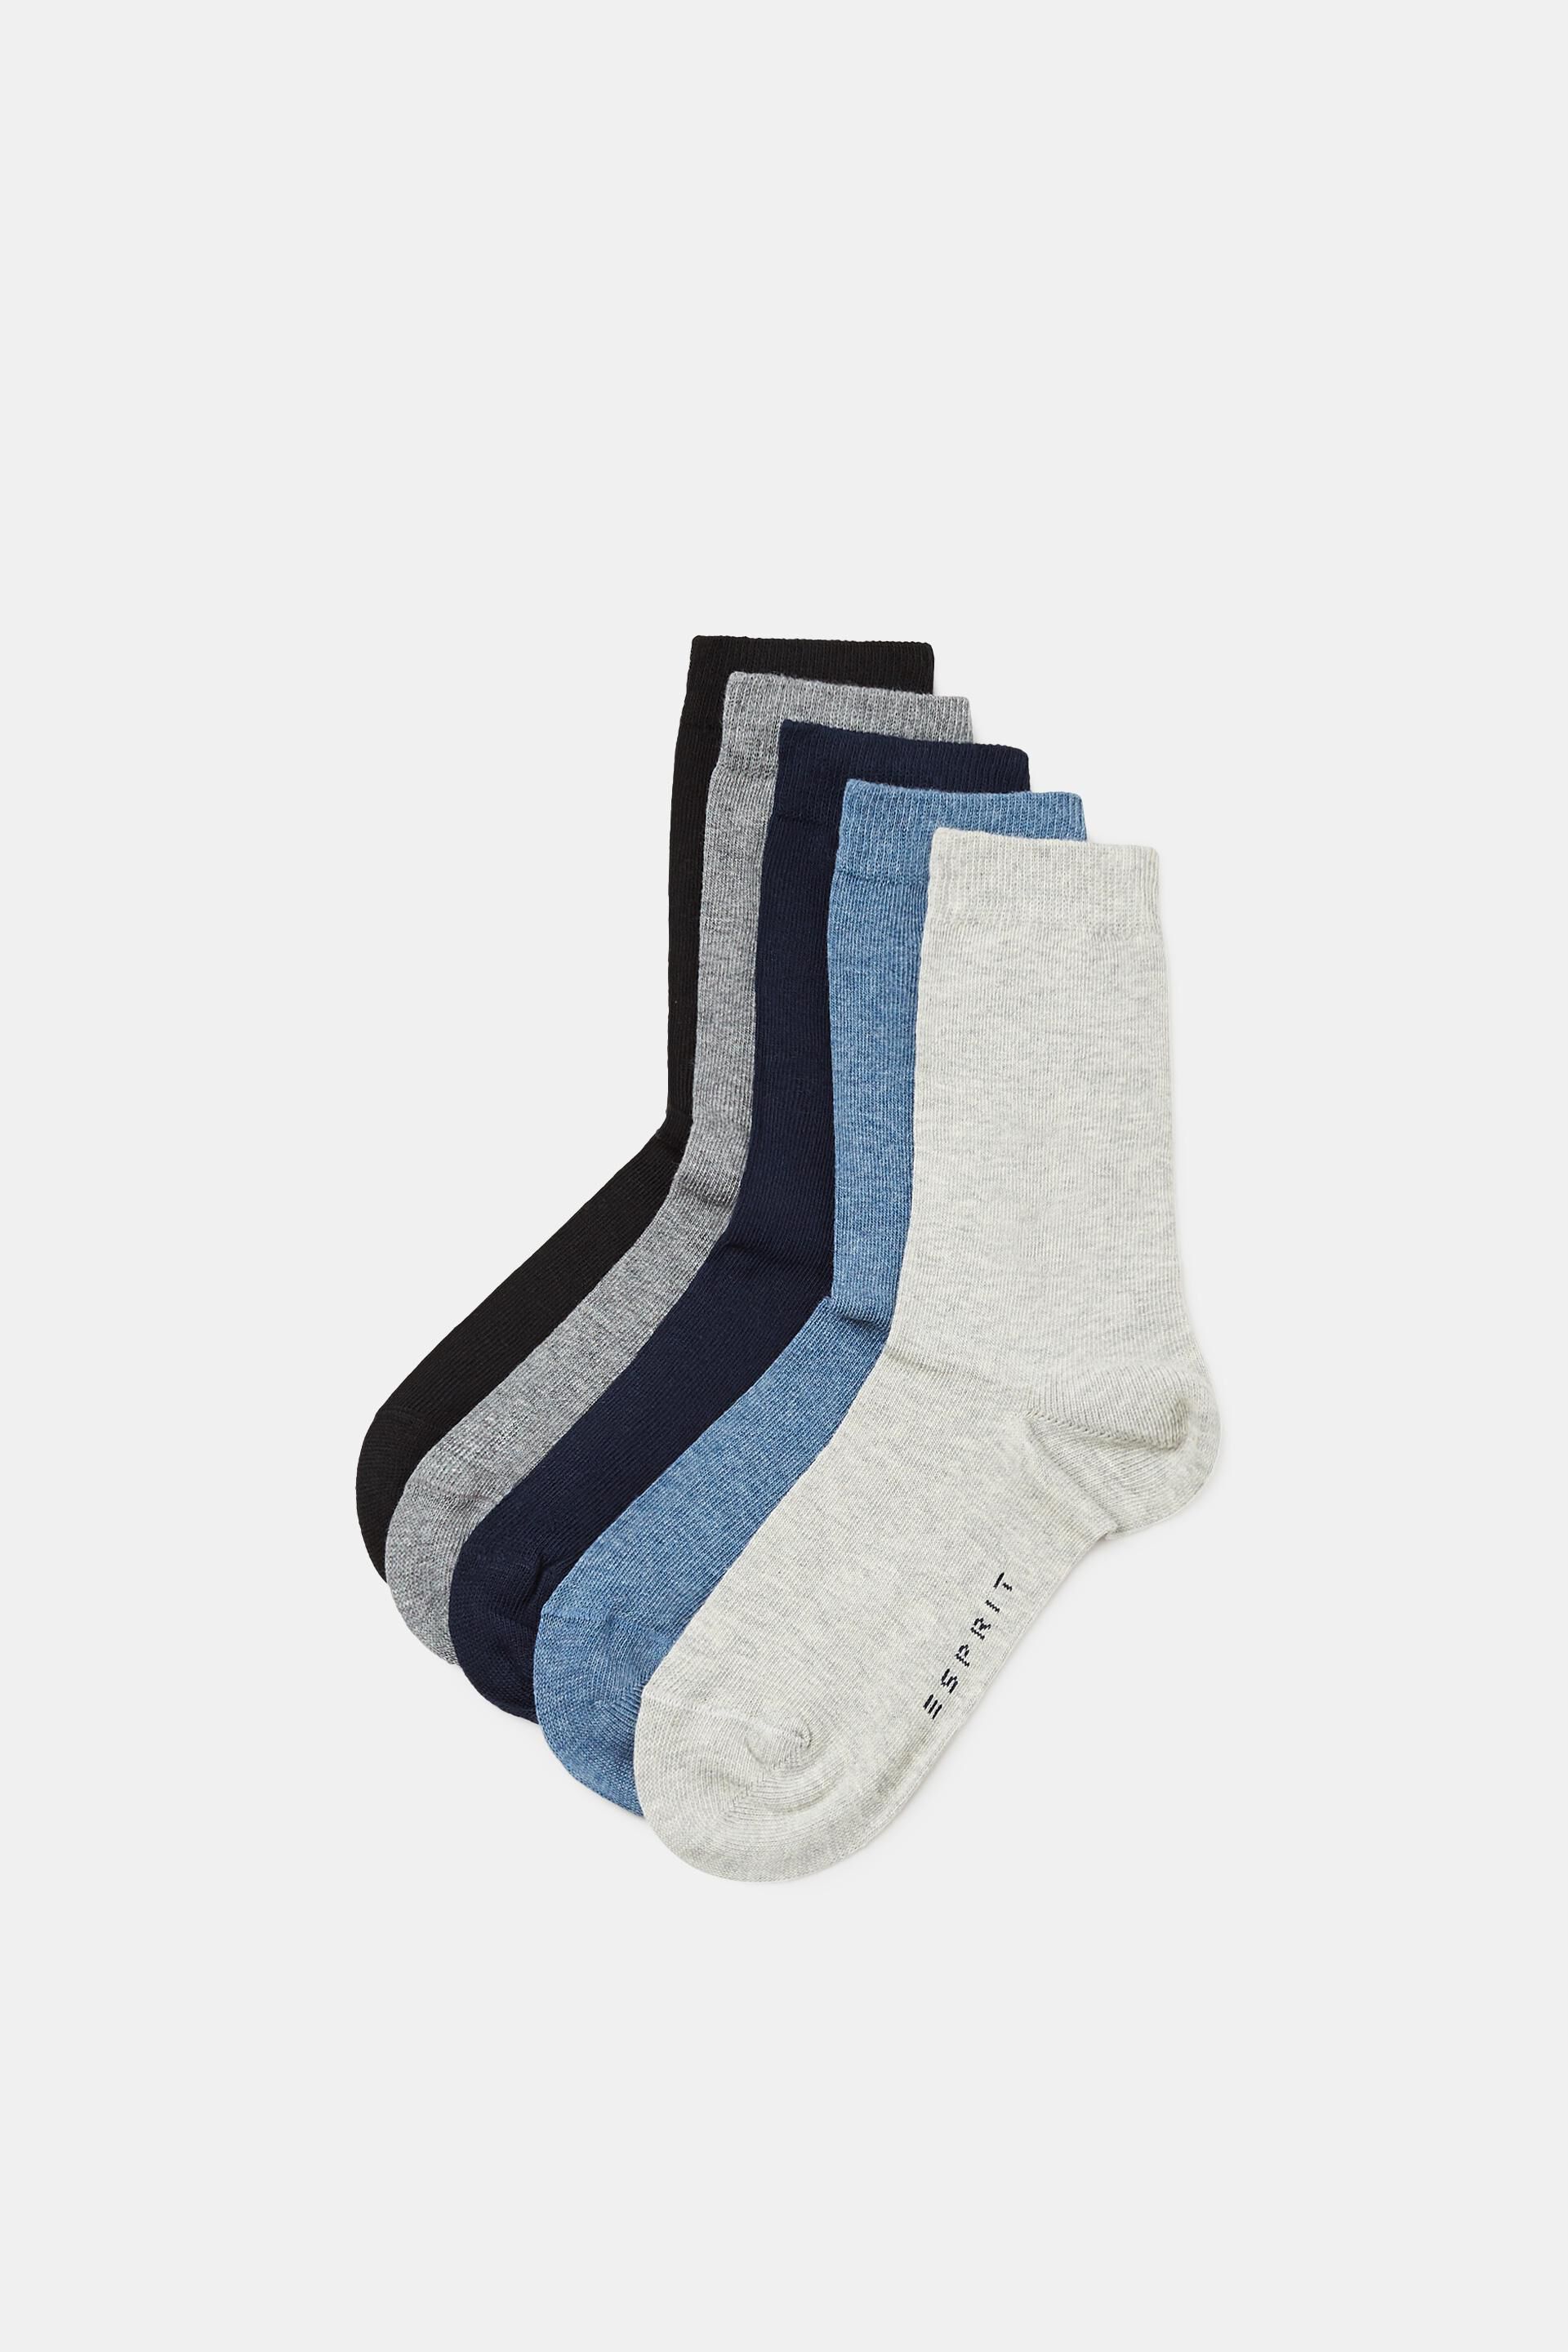 Esprit pack plain-coloured socks of Five